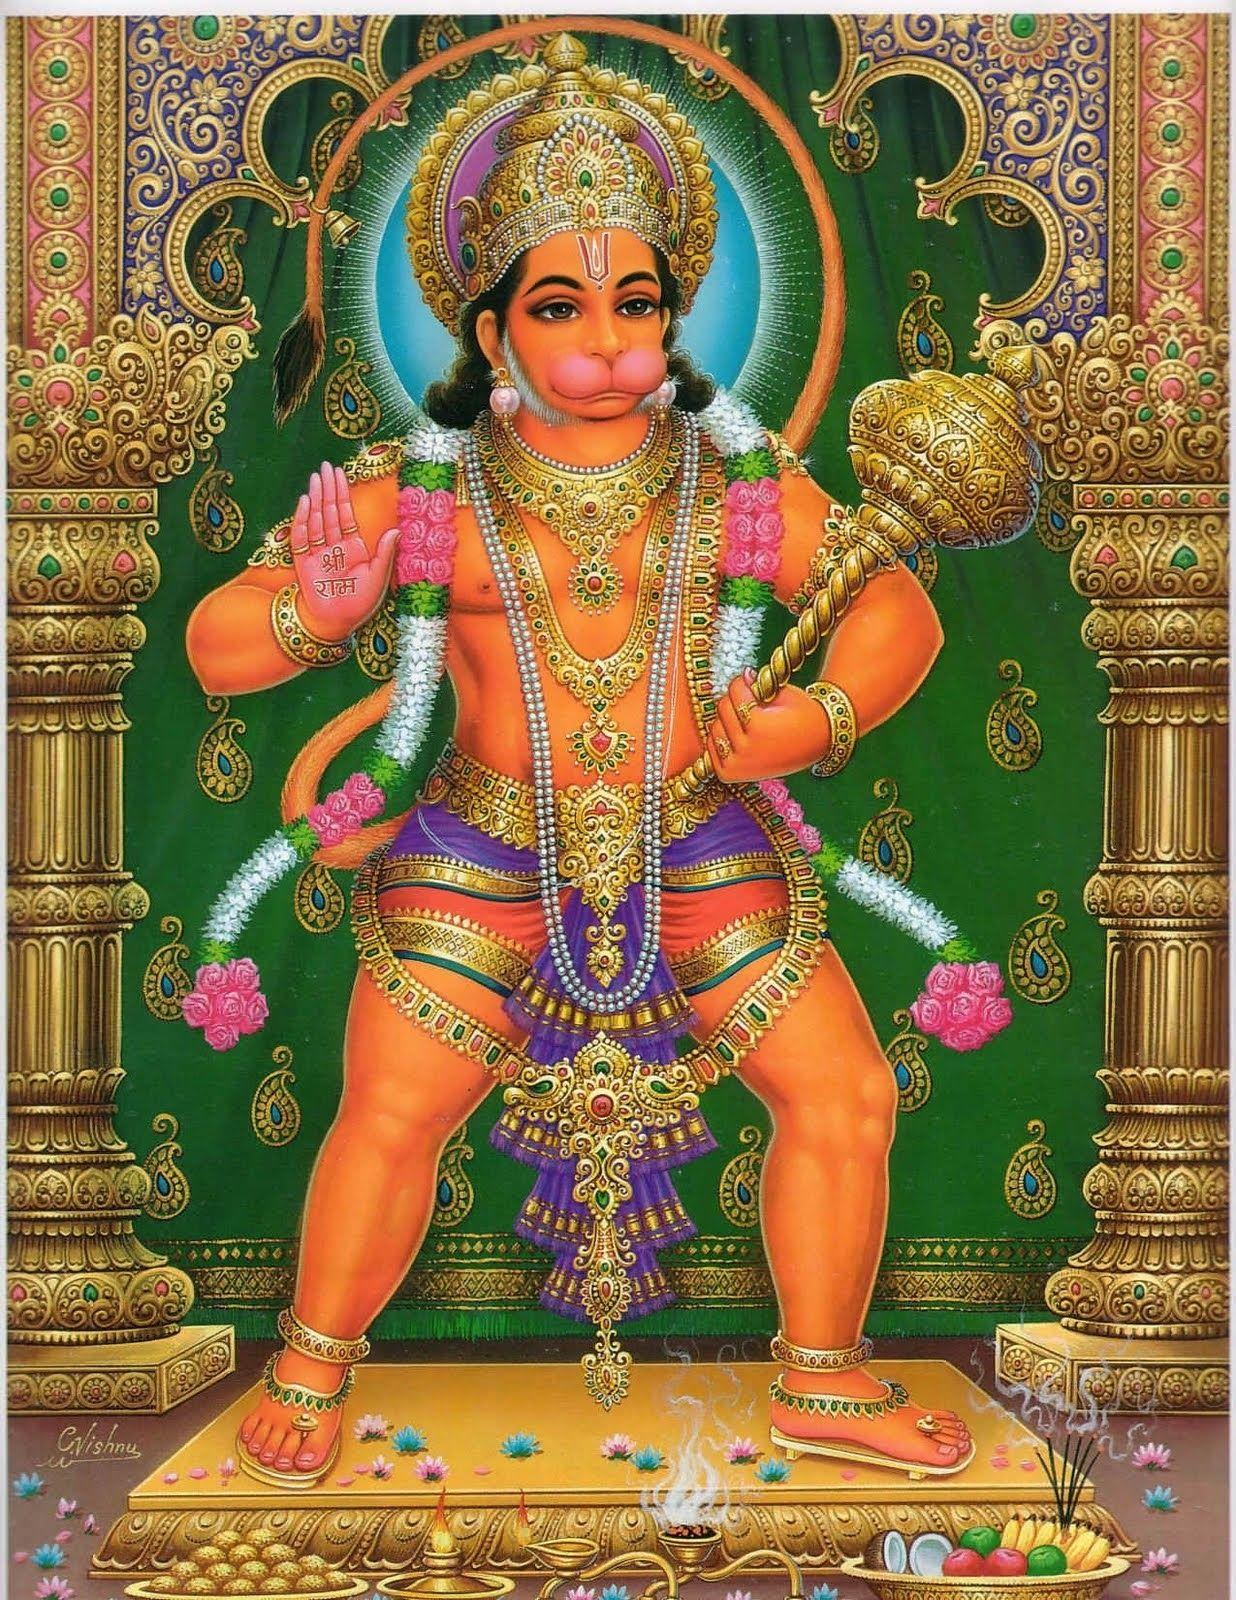 Hindu God Wallpaper Free Download For Mobile